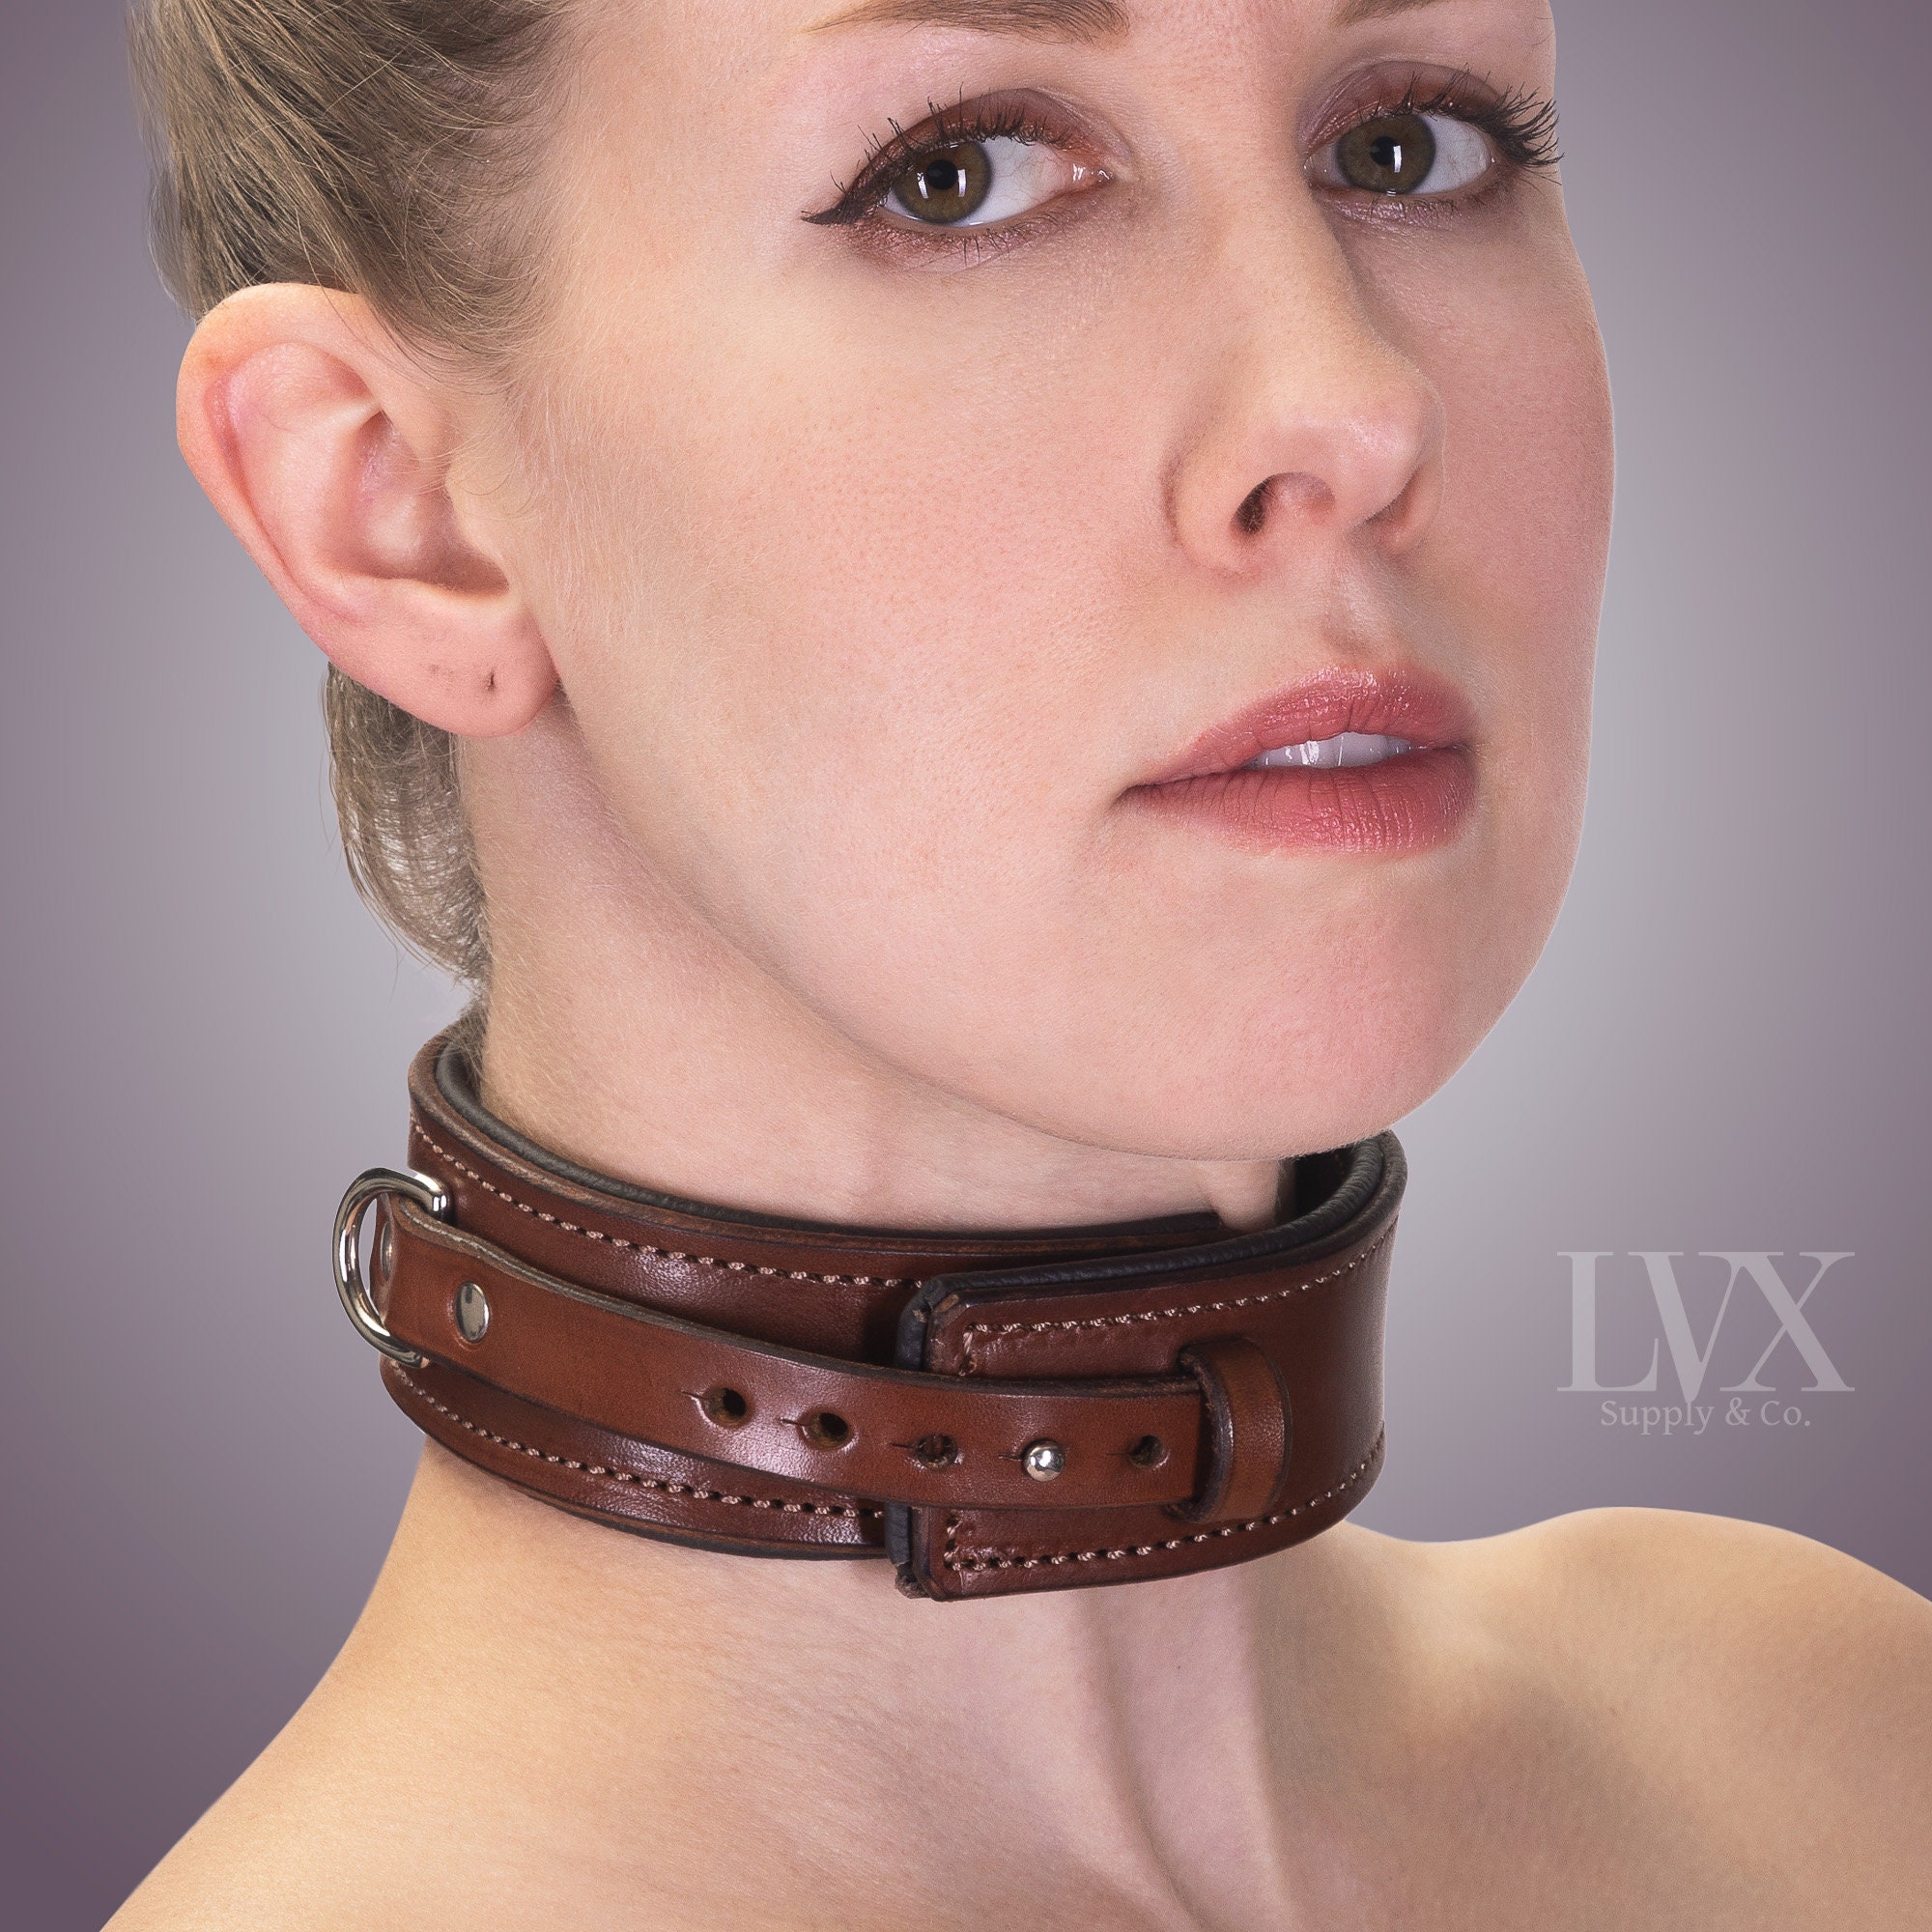 Slim Quick-Release BDSM Collar | Padded Leather Bondage Collar, DDLG Femdom Slave Pet Fetish | BDsM-Gear for Women Submissive | LVX Supply photo